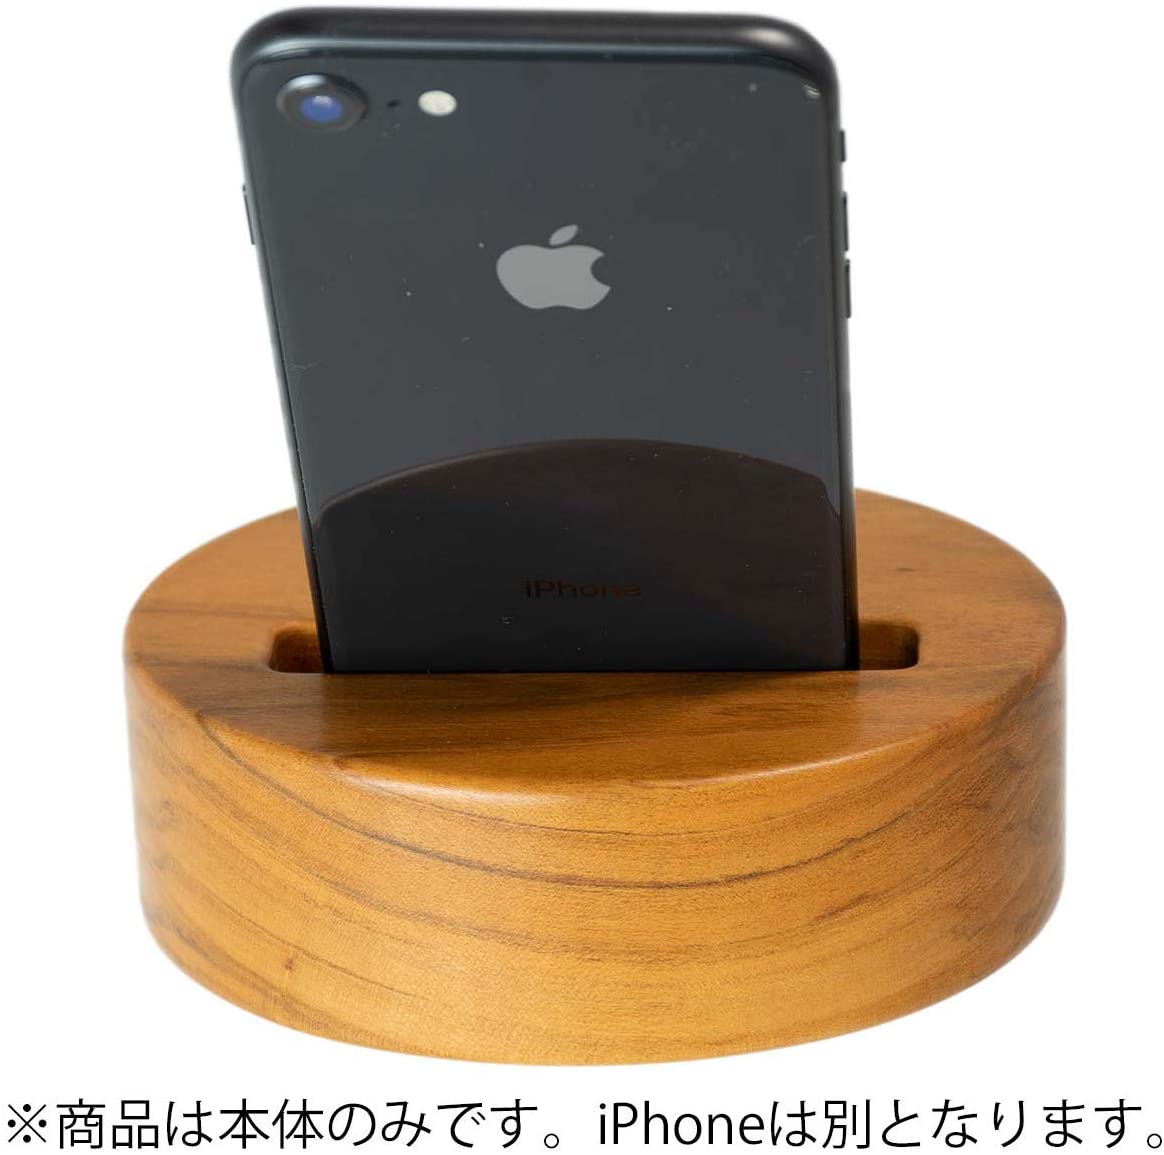 MUKUNE iPhone用 無電源 木製スピーカー  スタンダードタイプ ヤマザクラ